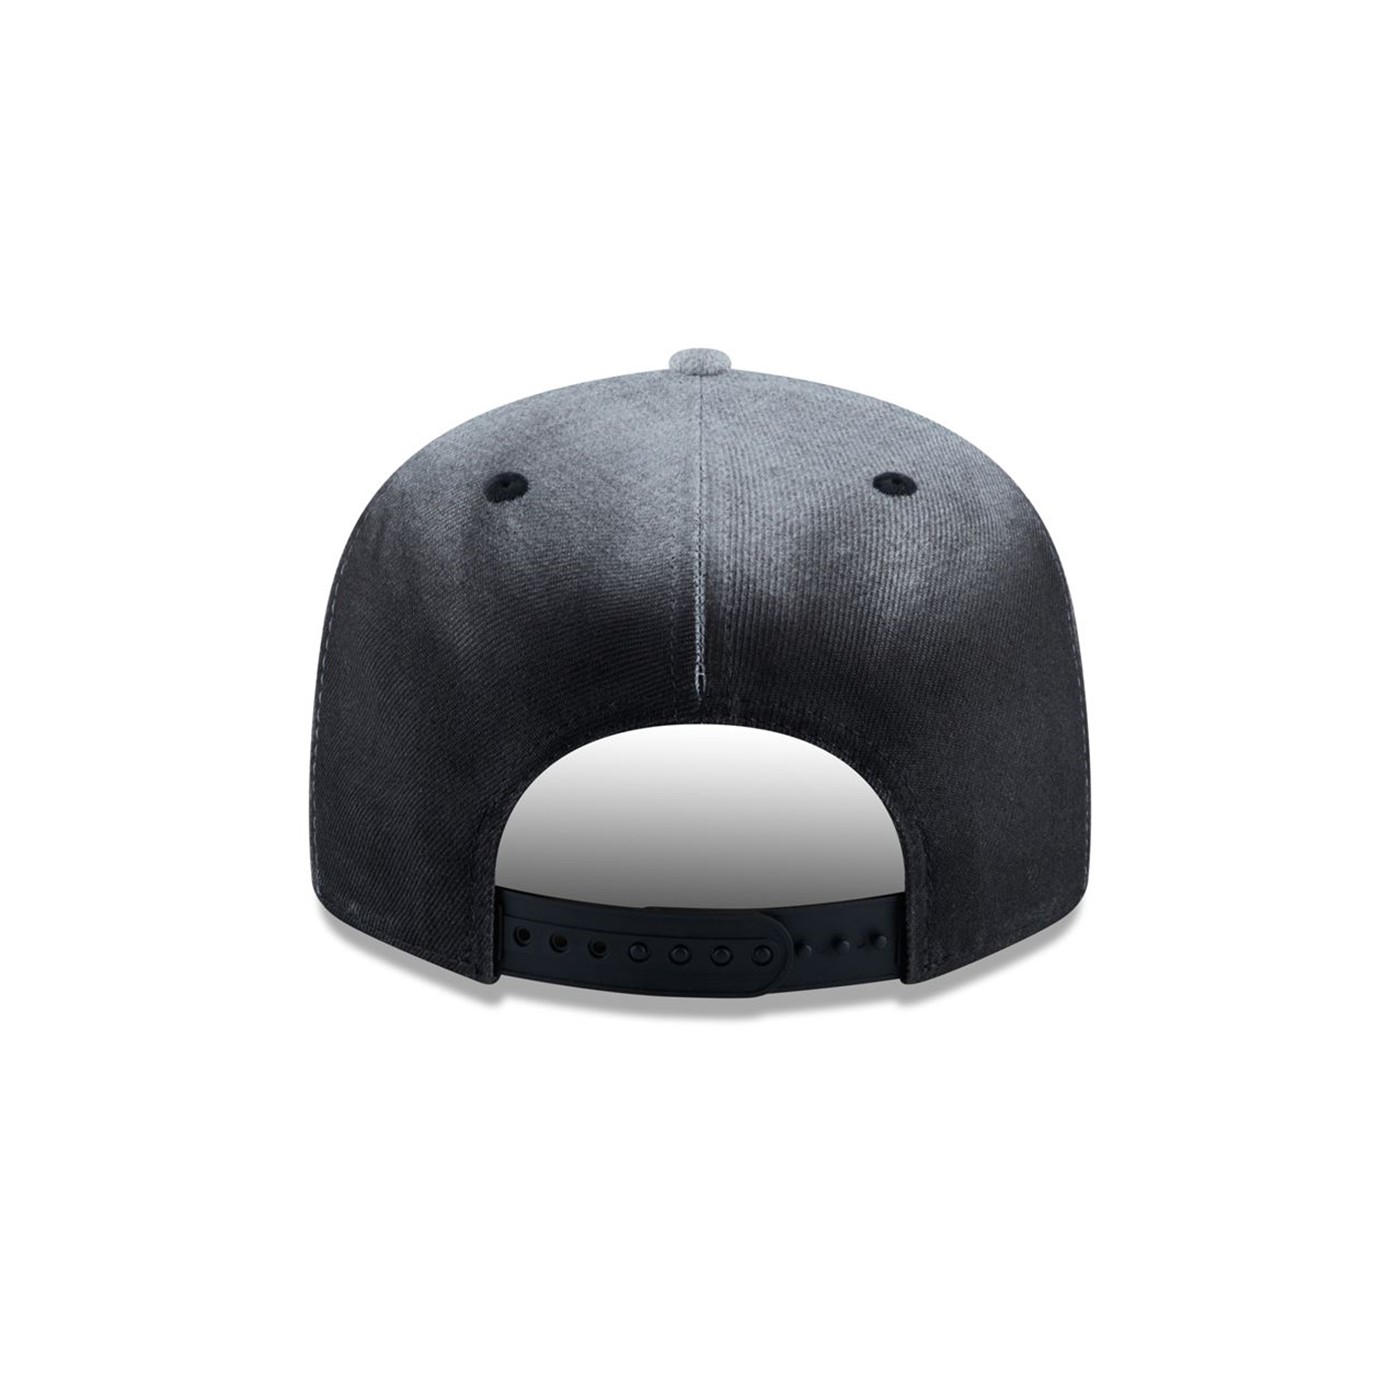 Black Panther Logo Dark Grey New Era 9Fifty Adjustable Hat